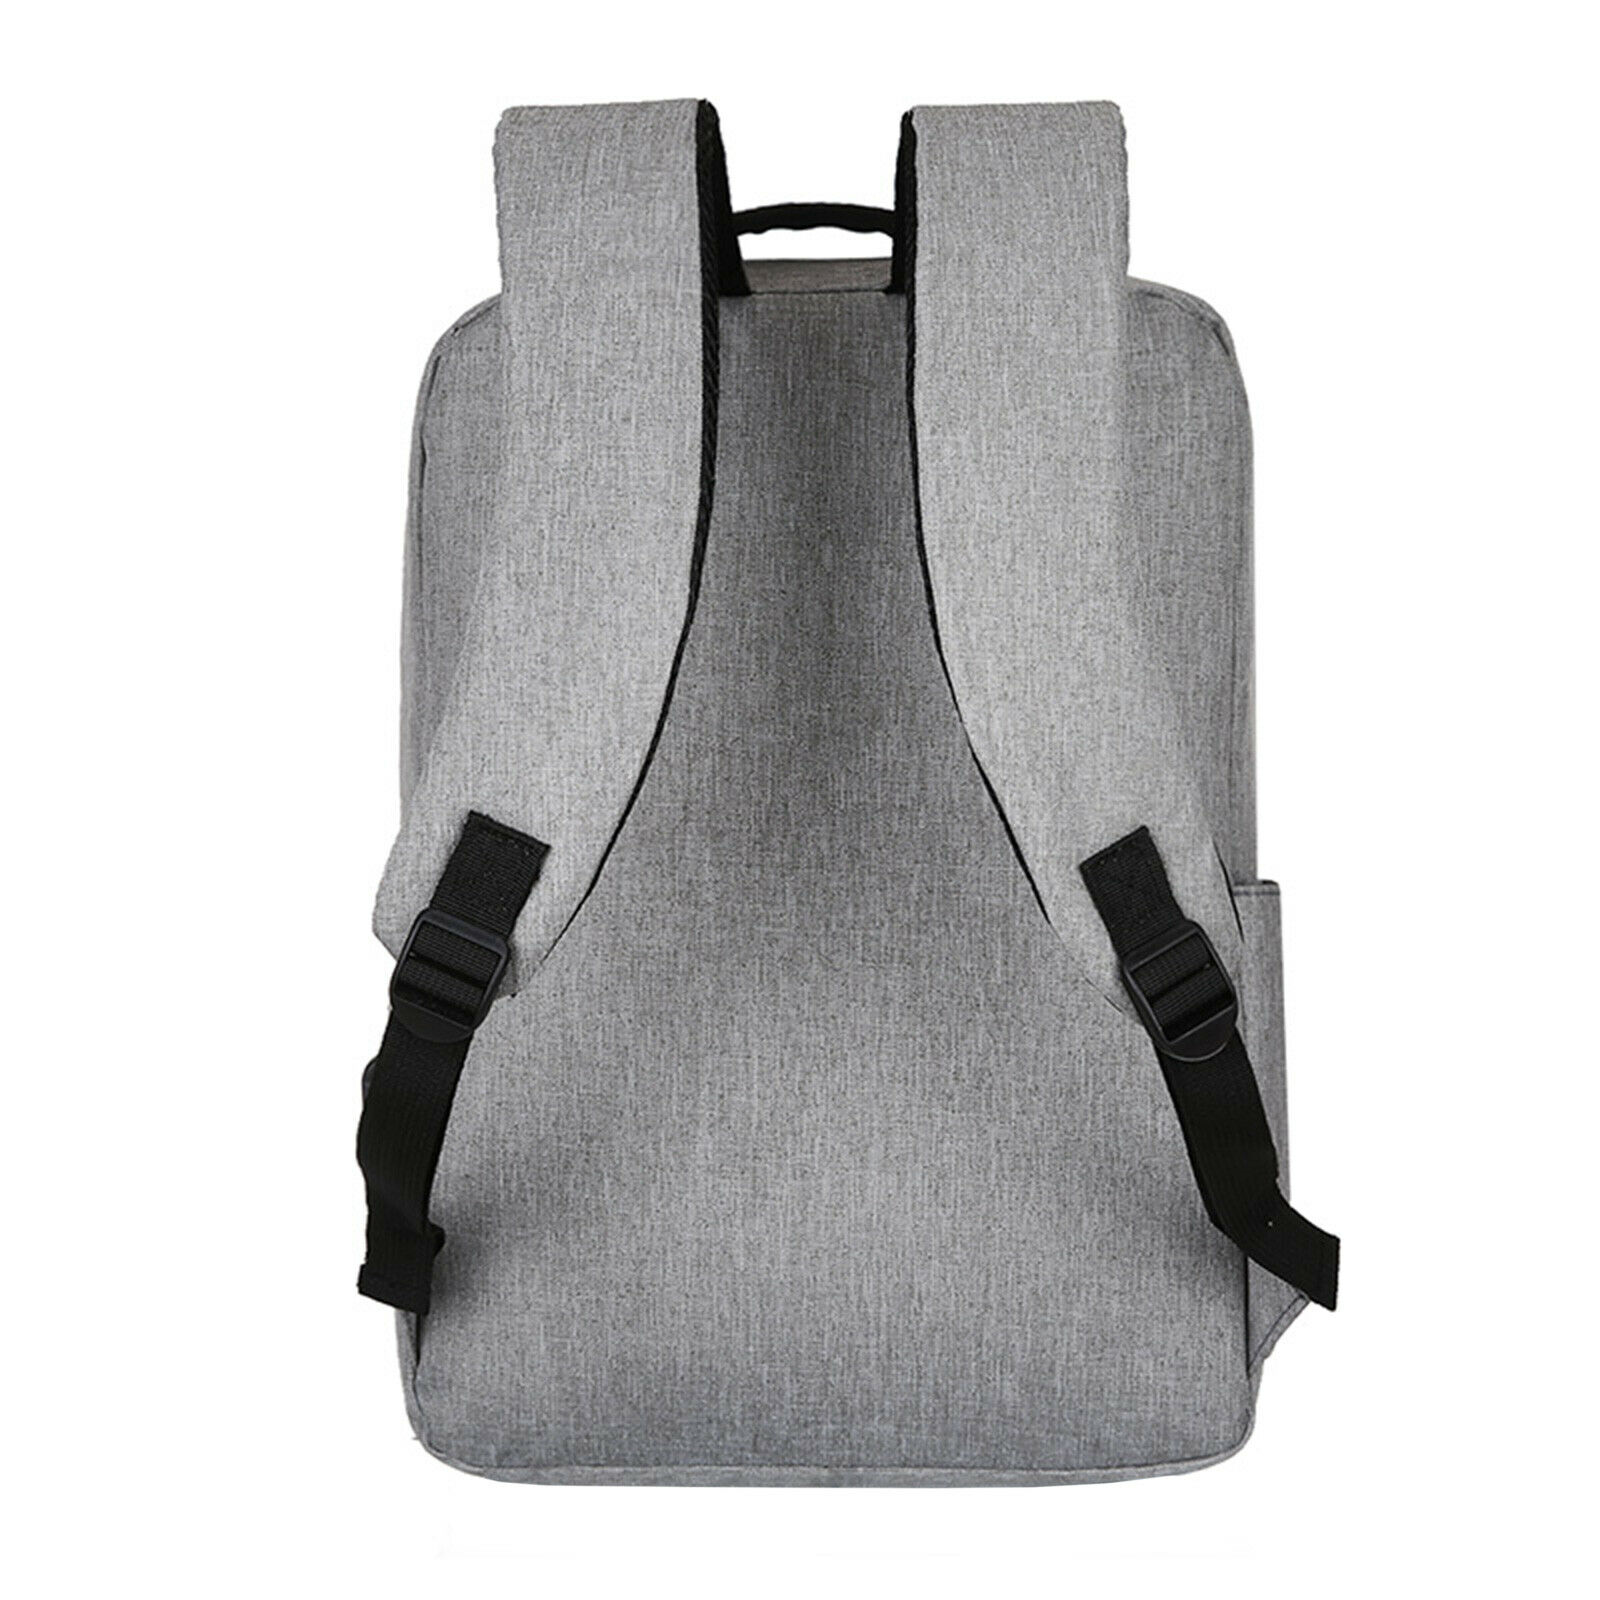 Novaa Bags 16" Slim Casual Waterproof Laptop Backpack with USB Charging Port Gray - image 5 of 5